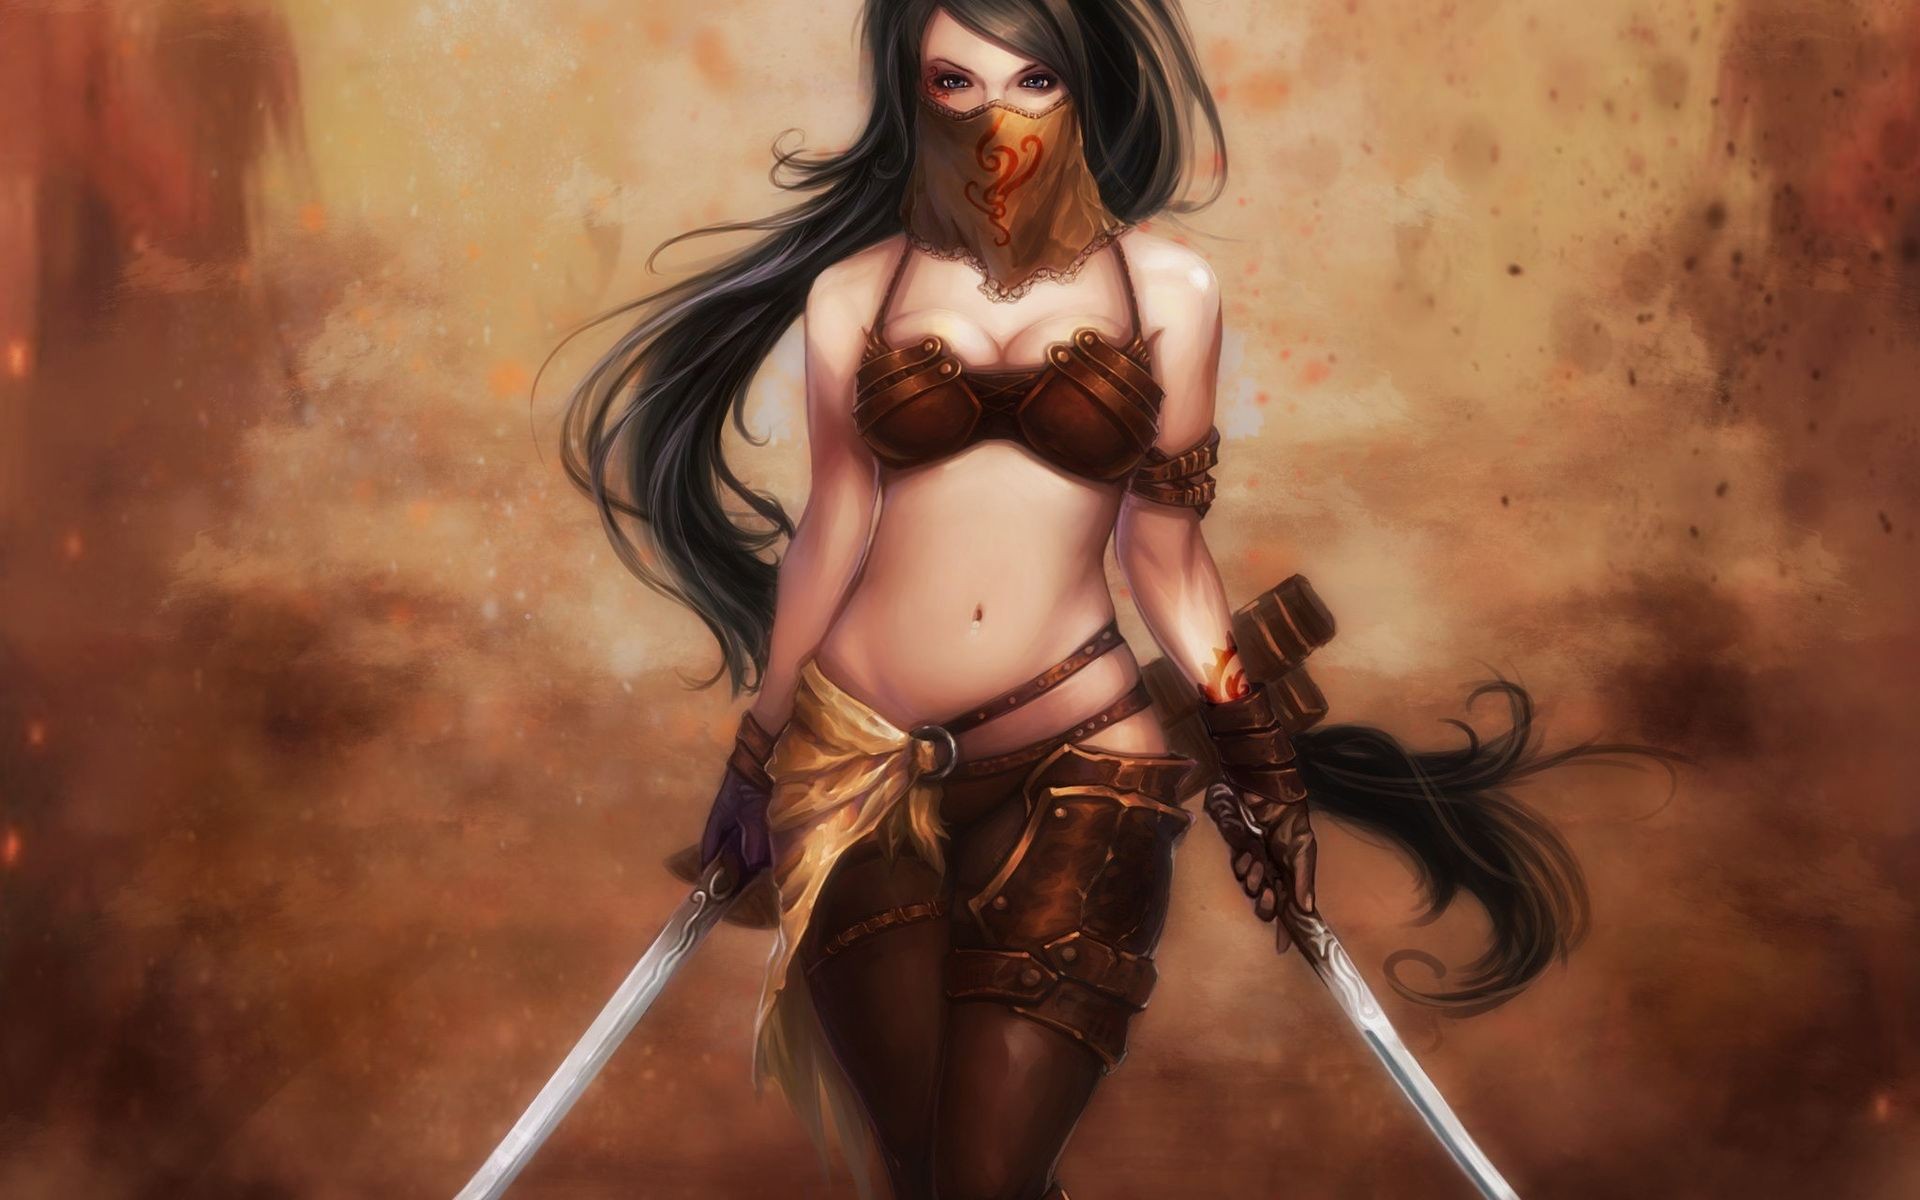 General 1920x1200 fantasy girl fantasy art boobs belly dark hair long hair weapon sword women with swords mask women bra